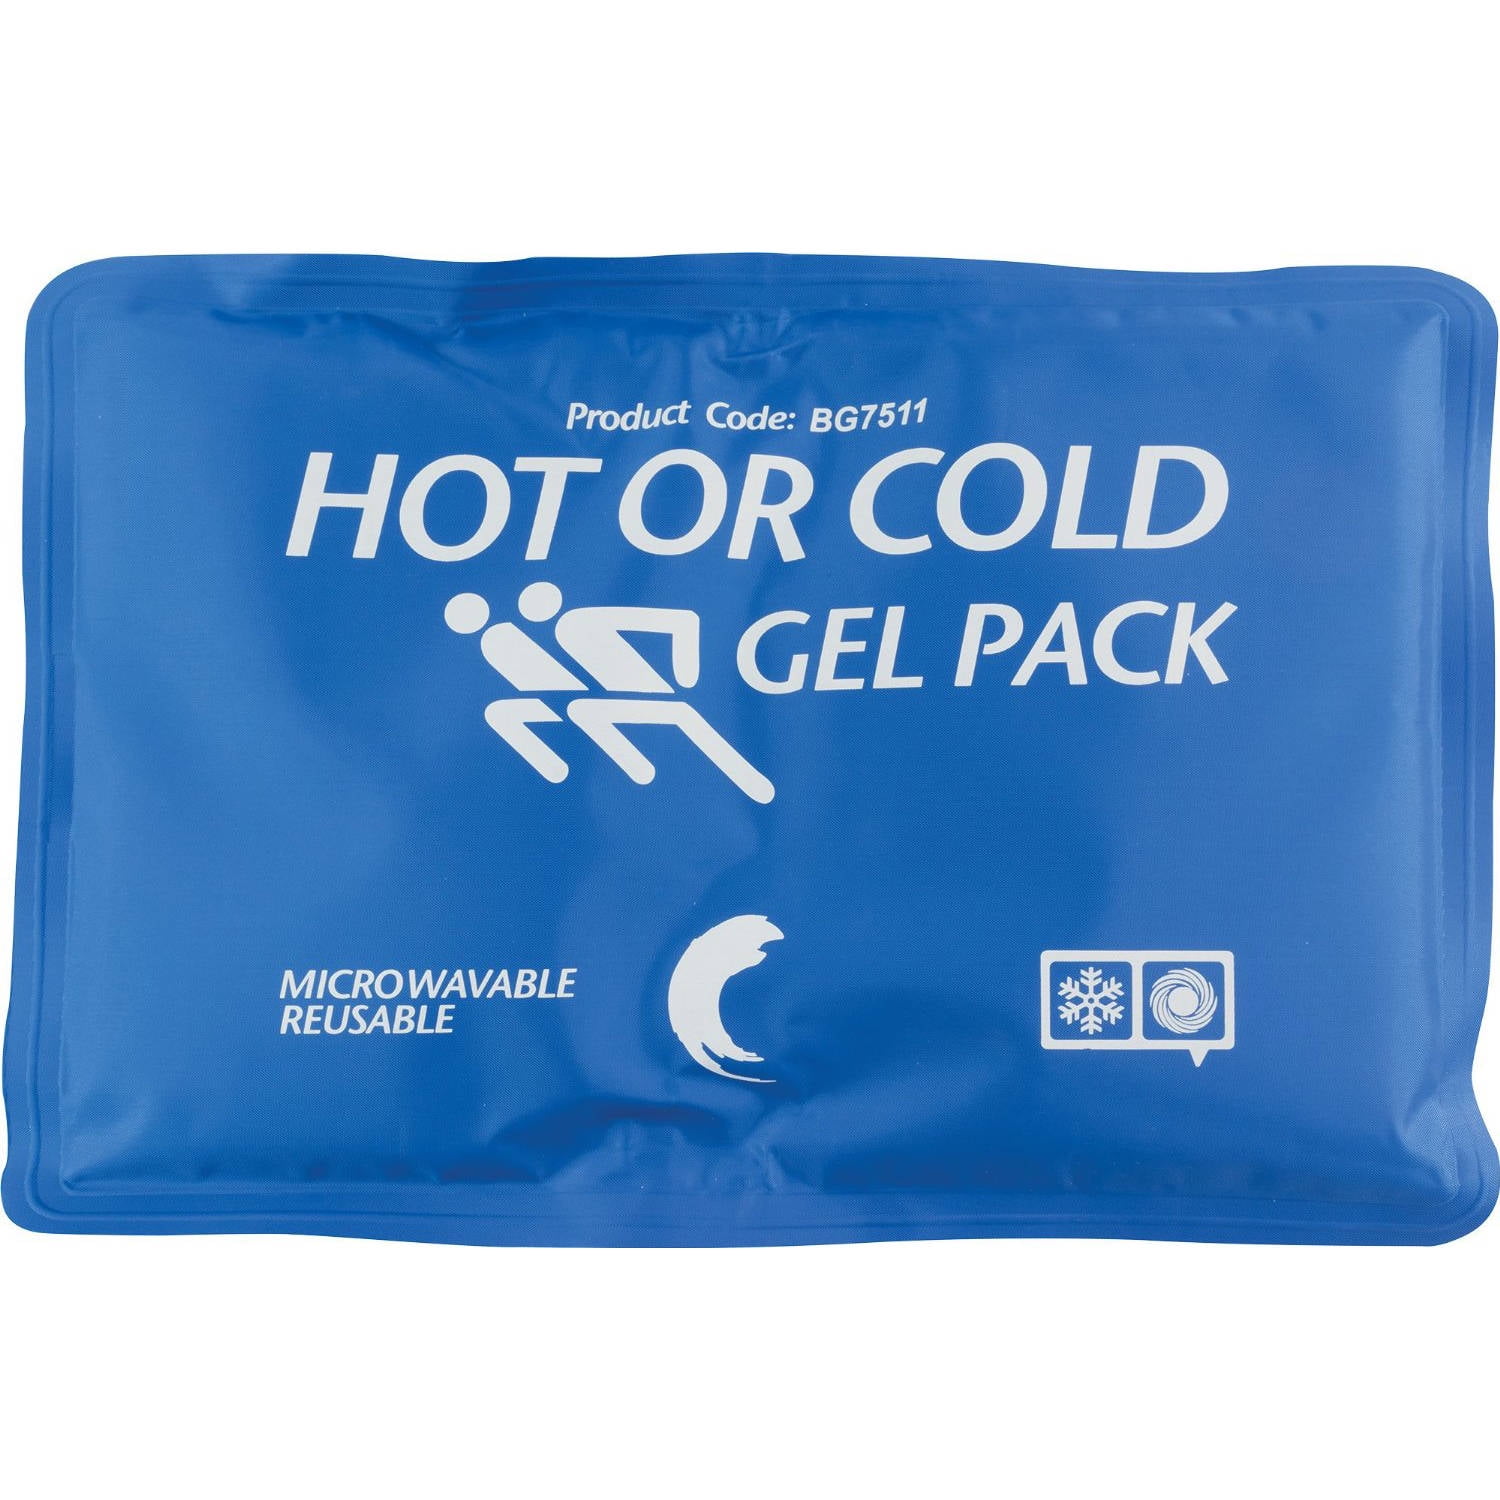 Gel Pack. Hot or Cold Gel Pack. Гель пак 26 производители.